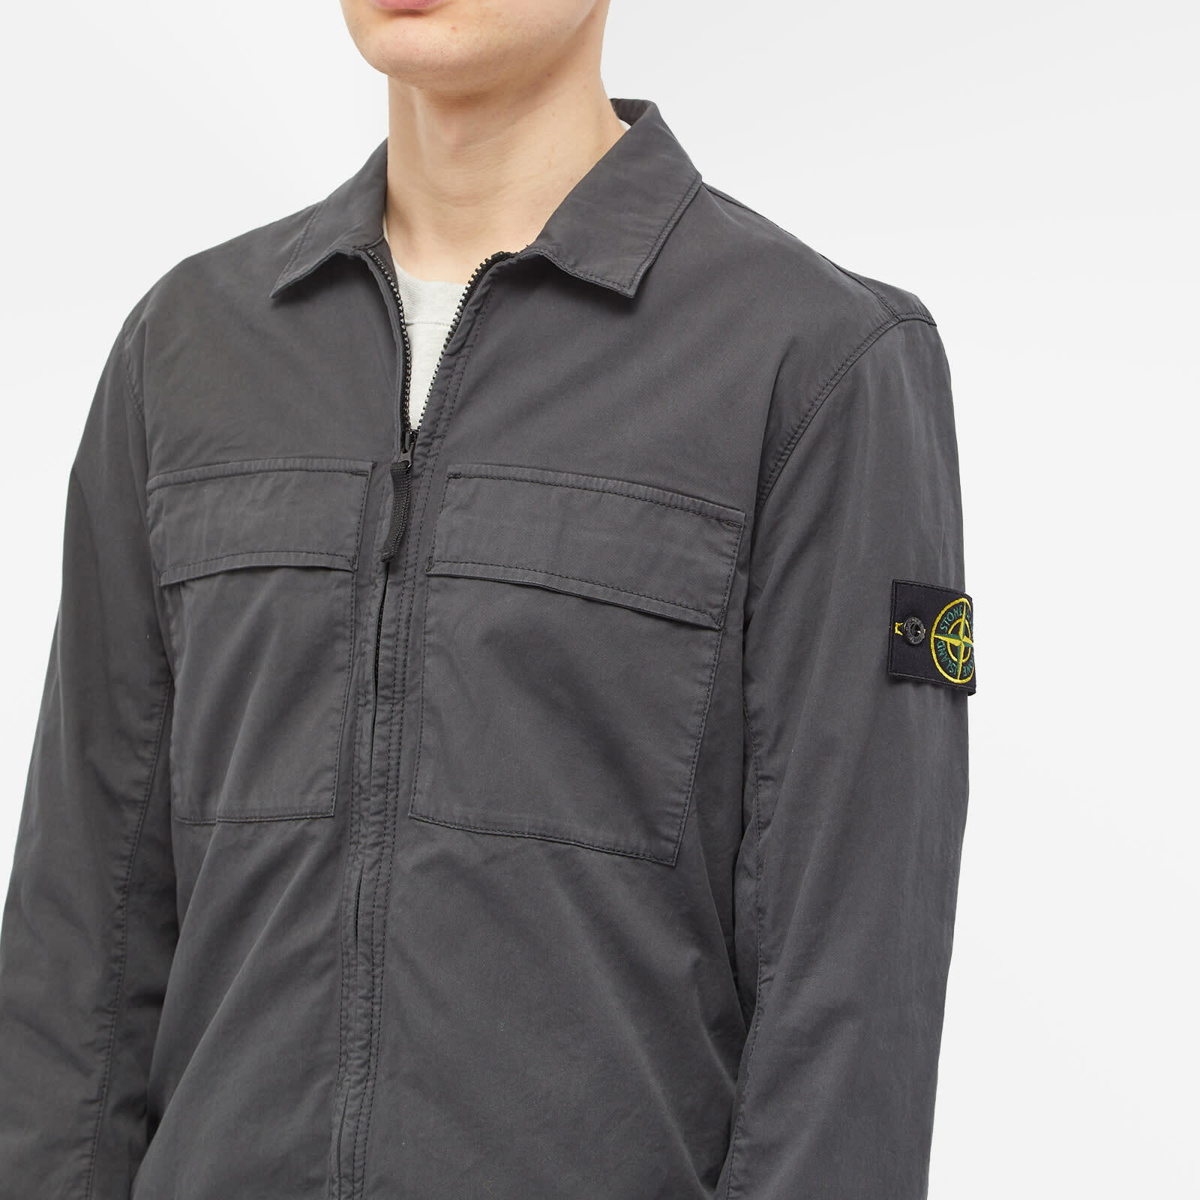 stone island zip shirt jacket 20ss肩幅46cm